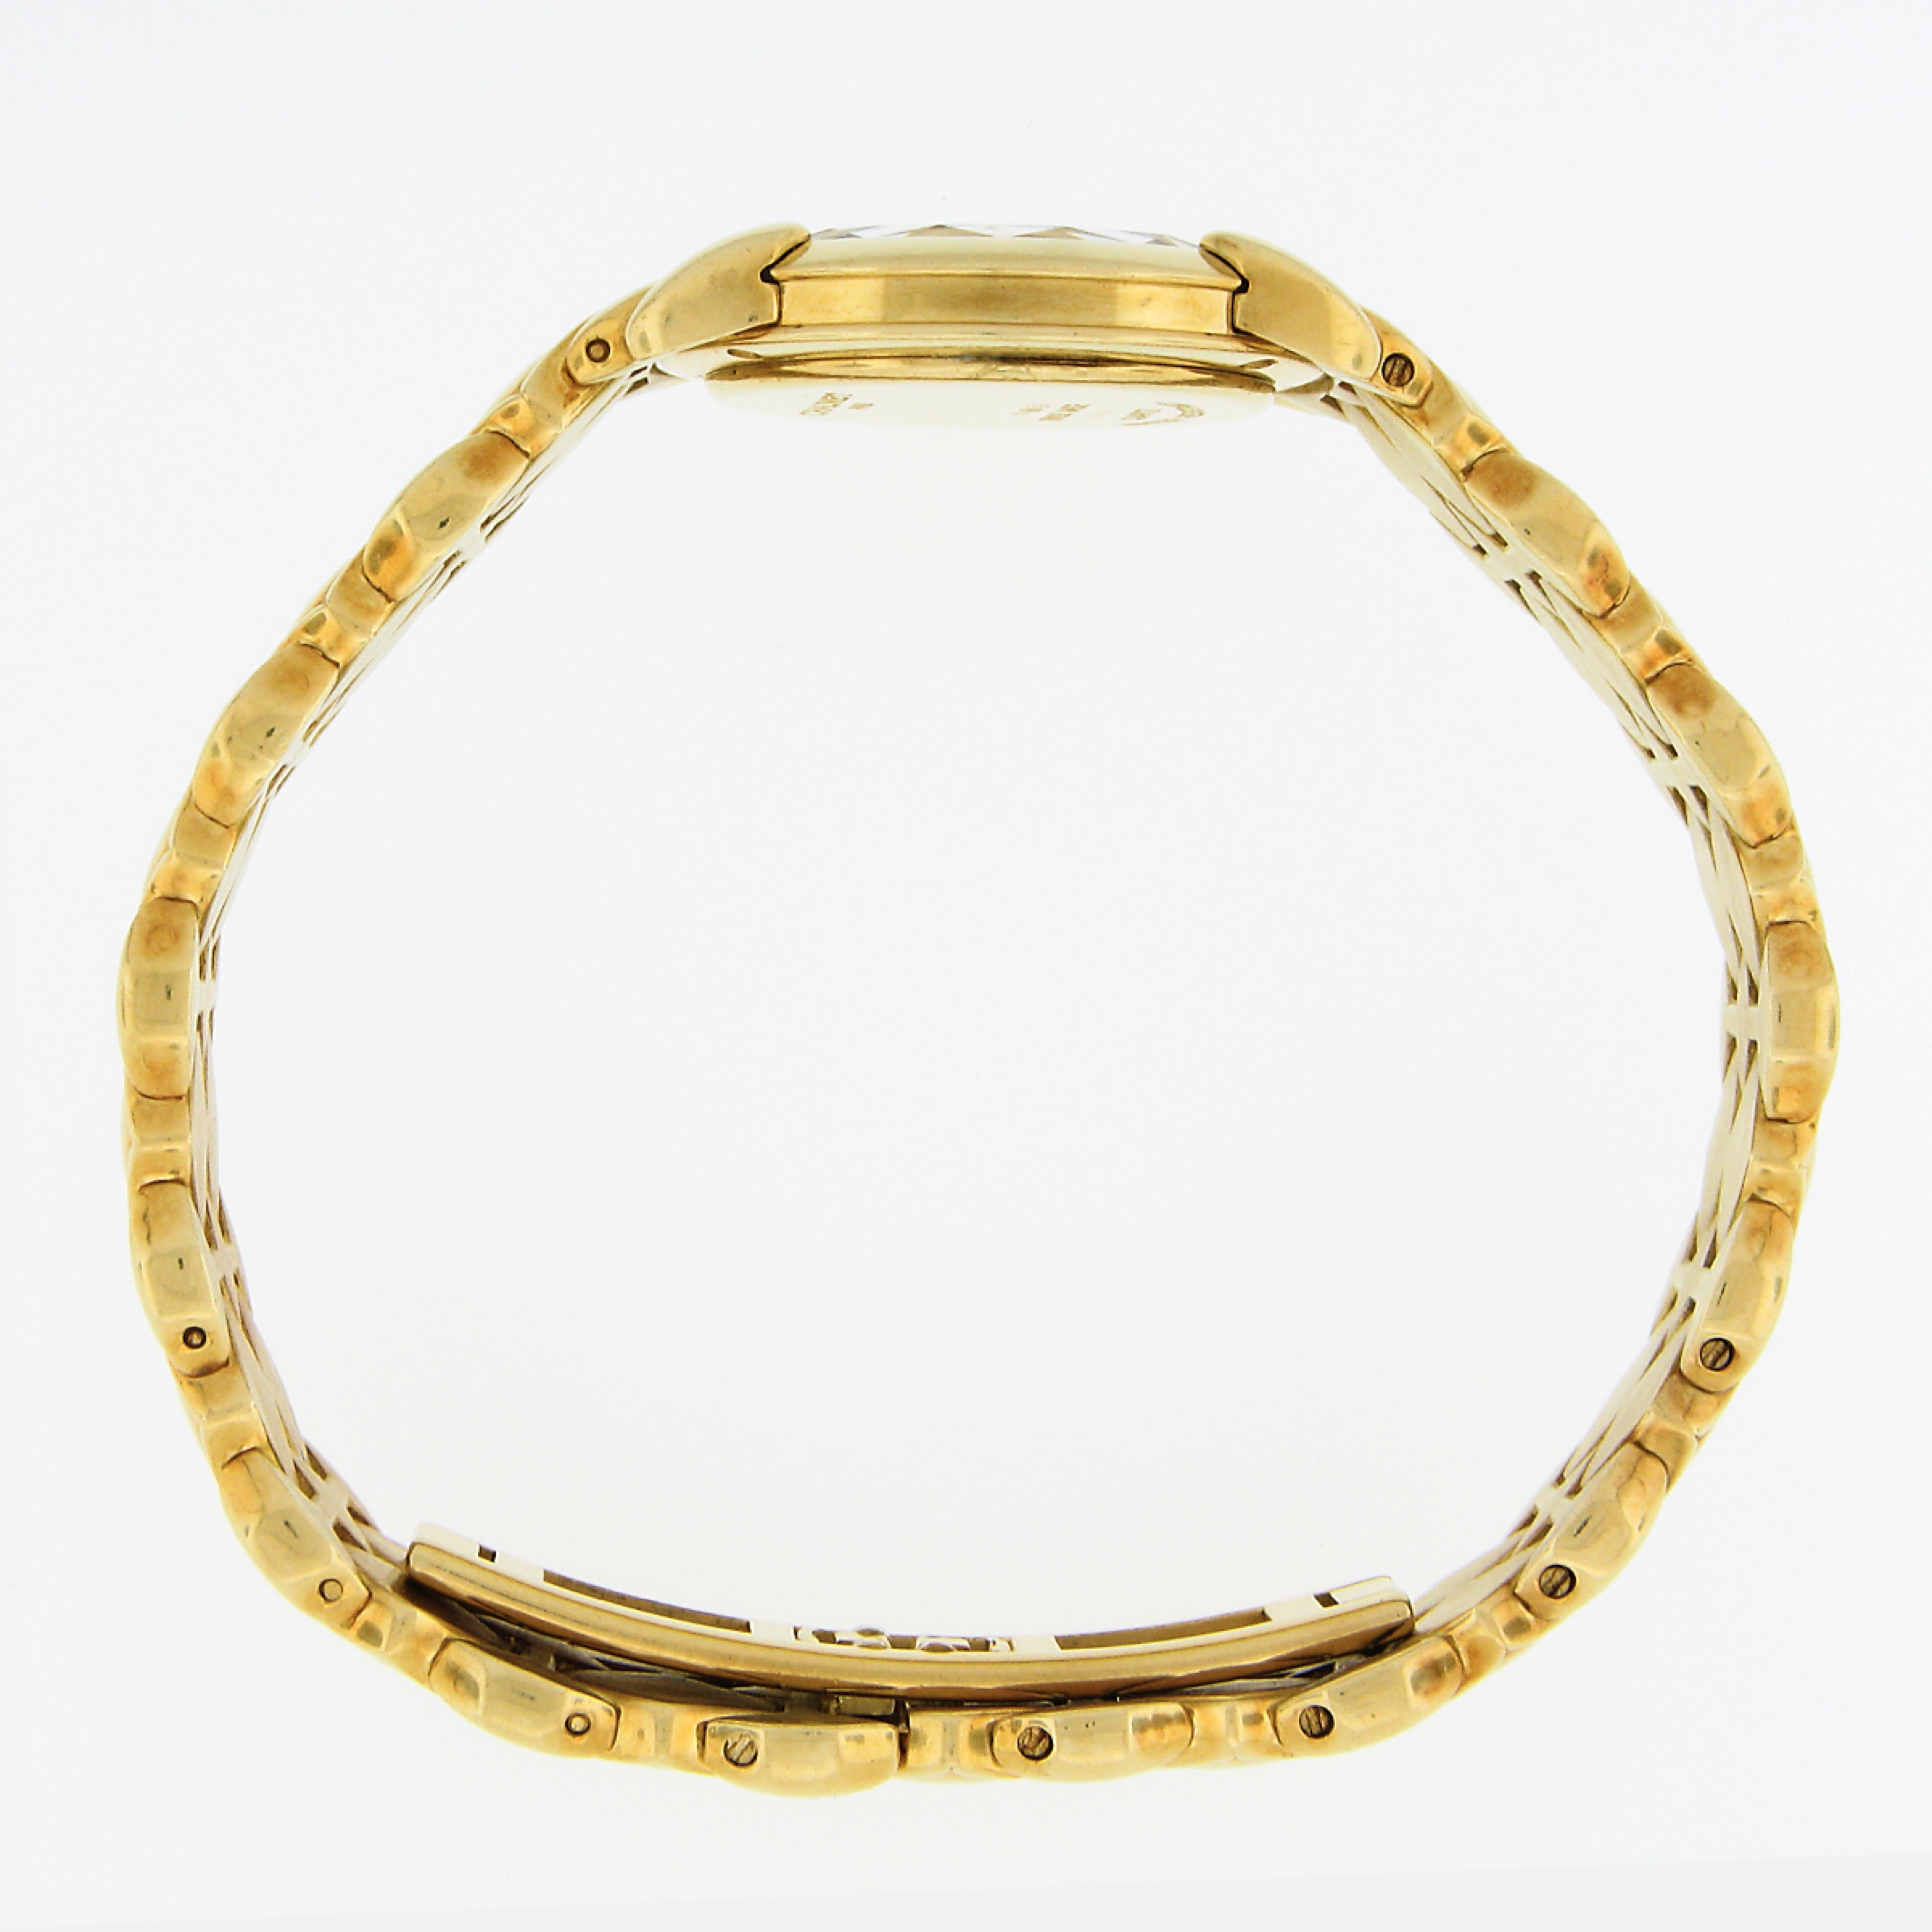 Ladies' Chaumet Elysees 18k Gold Quartz Date Watch w/ MoP & Diamond Dial In Good Condition For Sale In Montclair, NJ